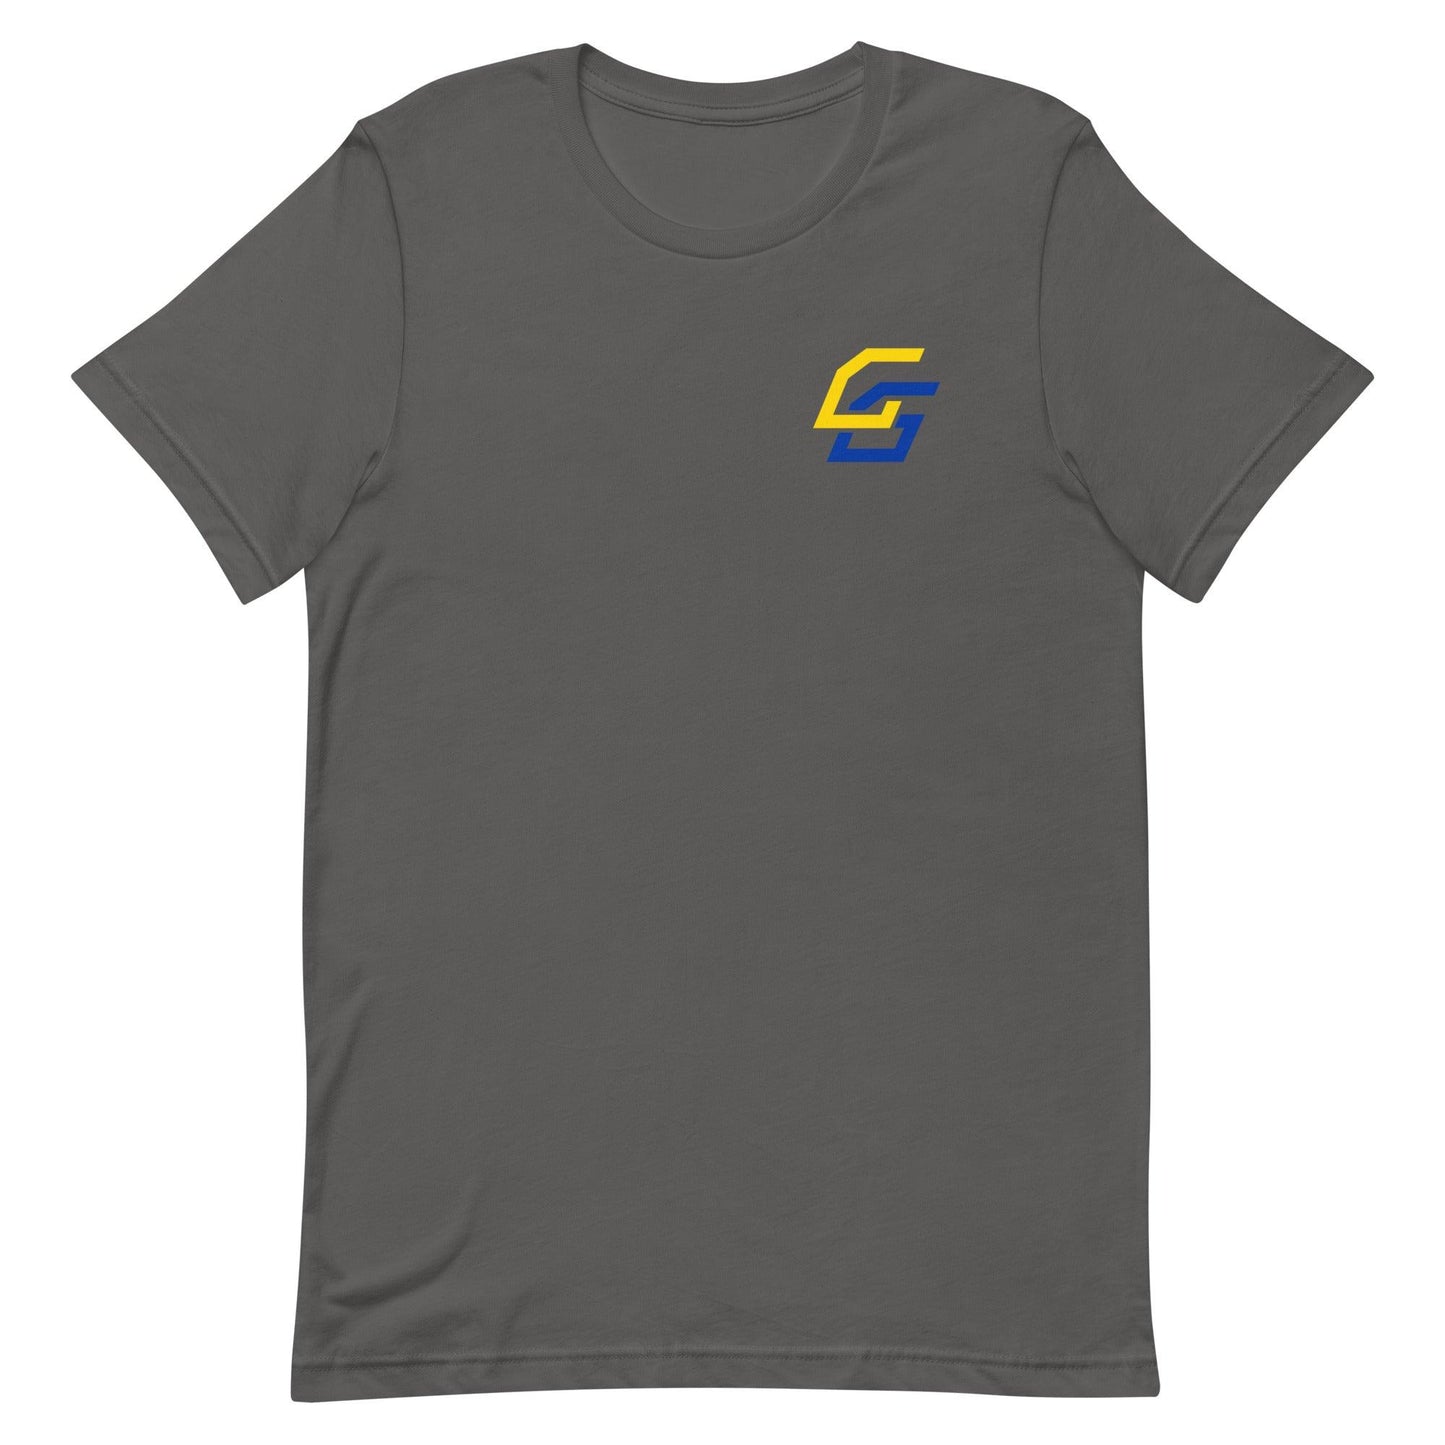 Garret Greenfield "Essential" t-shirt - Fan Arch